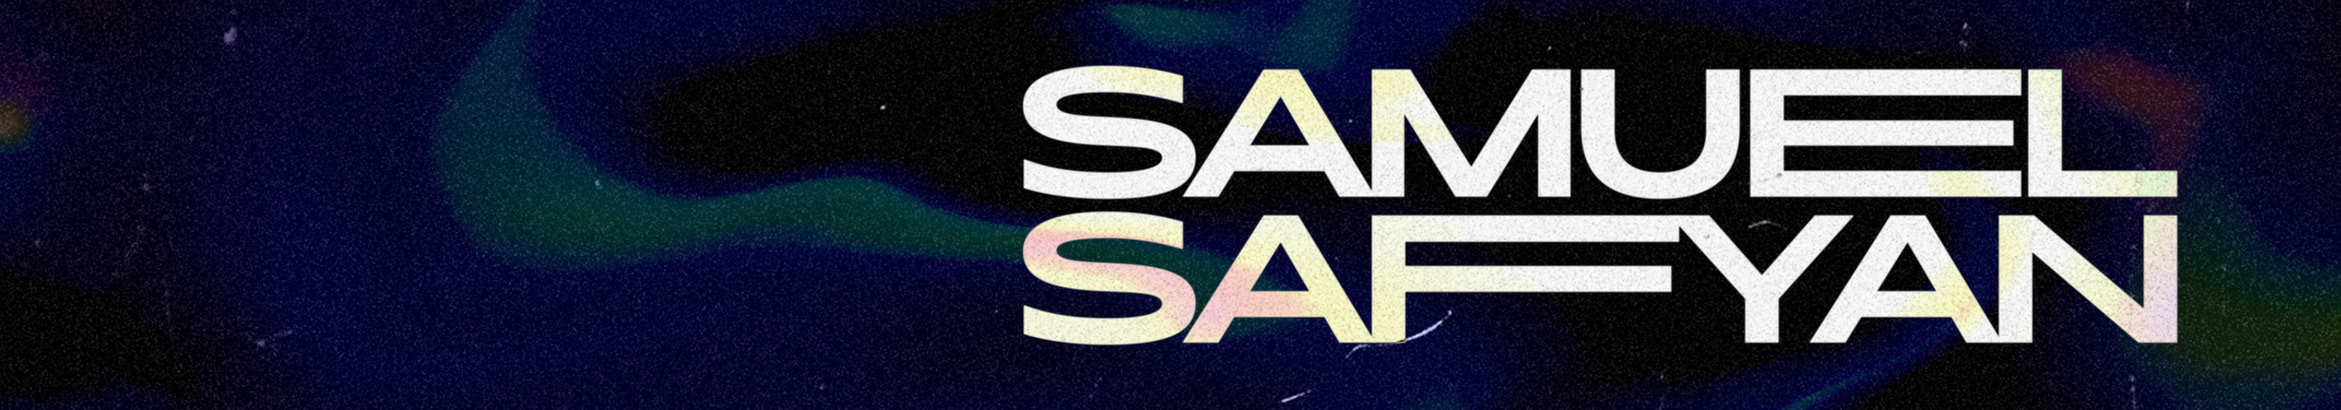 Samuel Safyan's profile banner